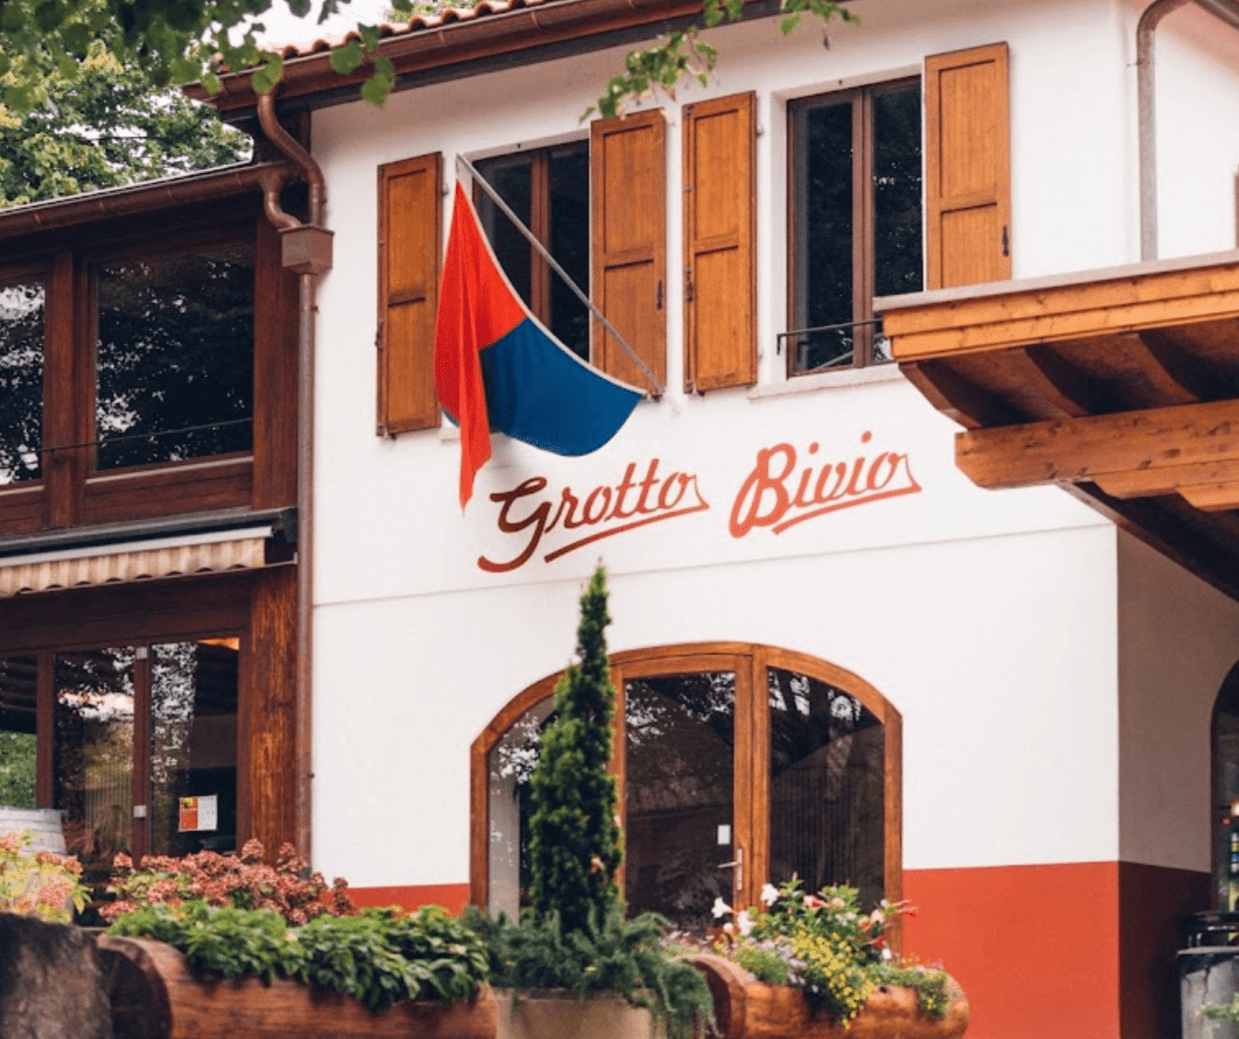 Grotto Bivio